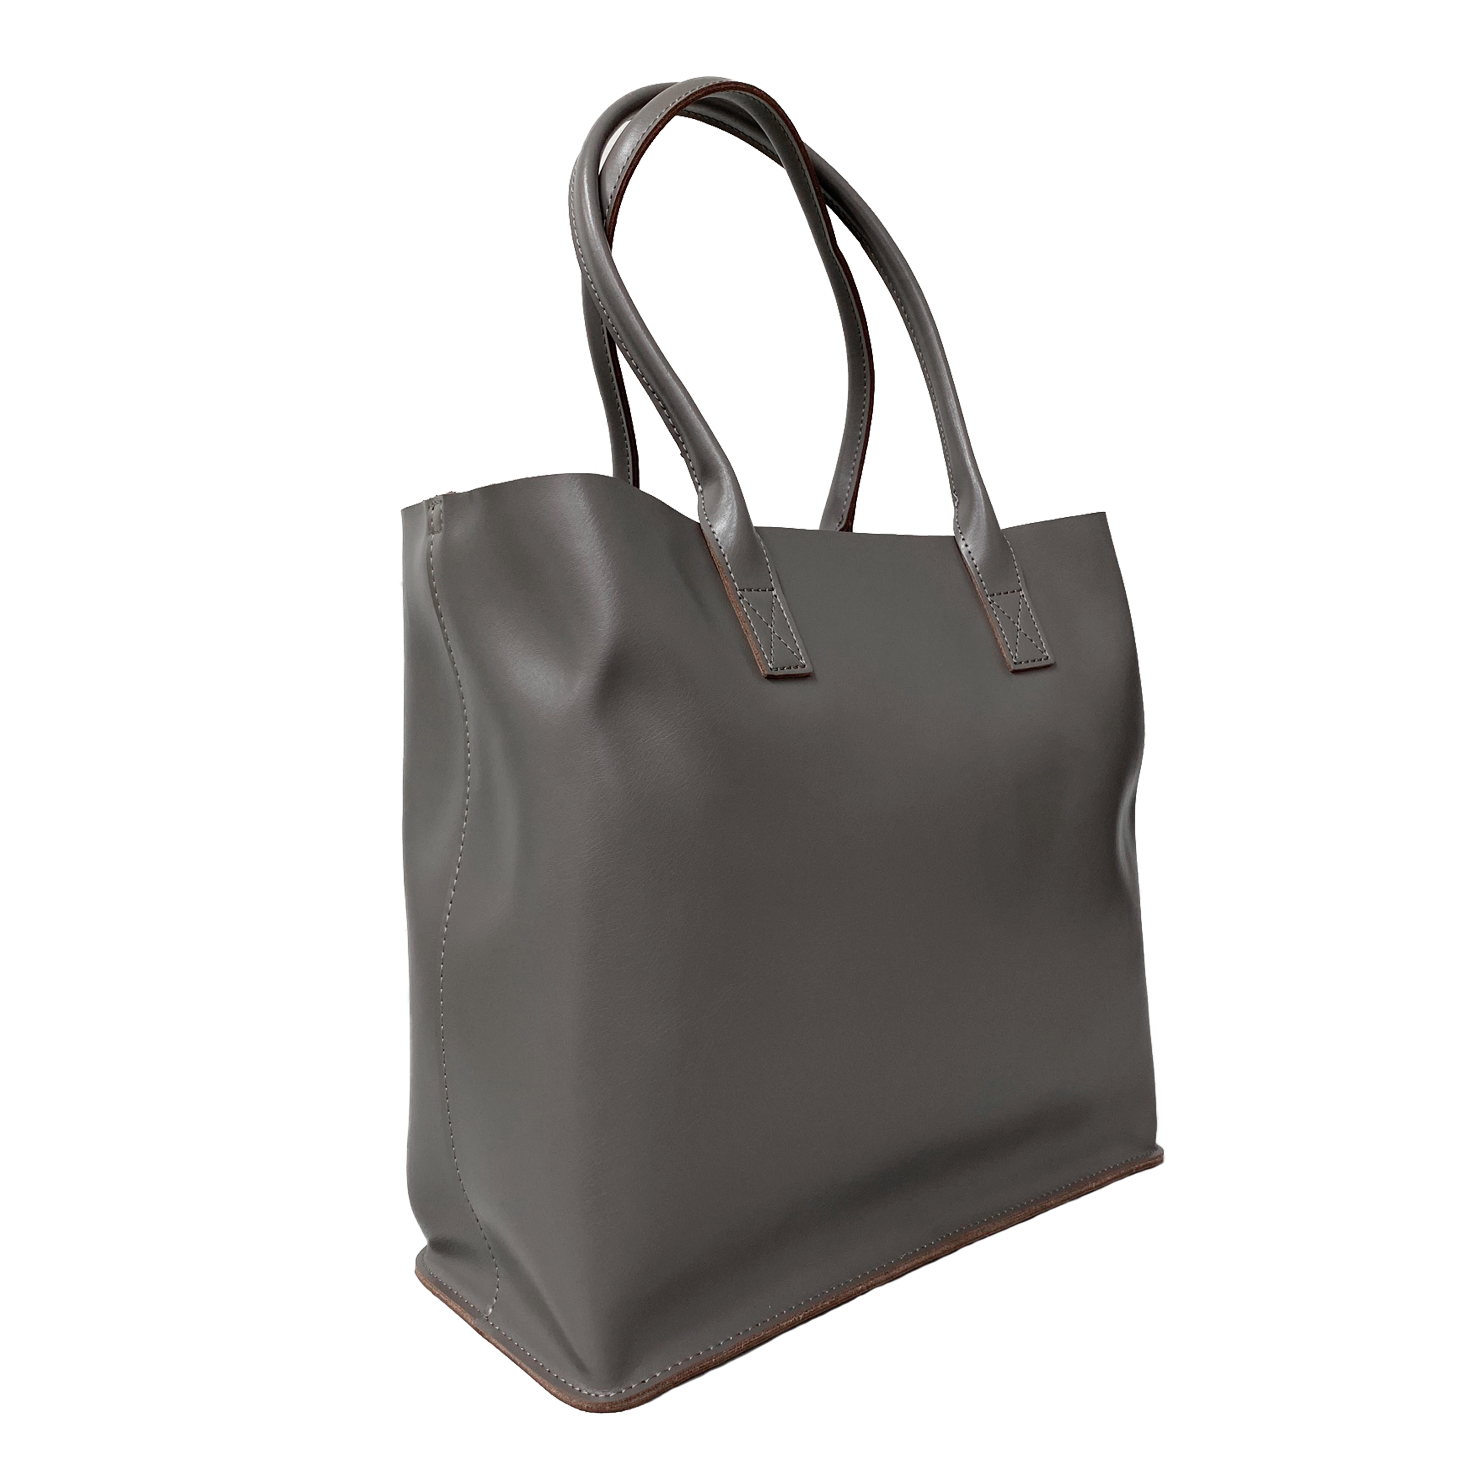 BIRCHGROVE - Women's Grey Genuine Leather Tote Bag freeshipping - BeltNBags